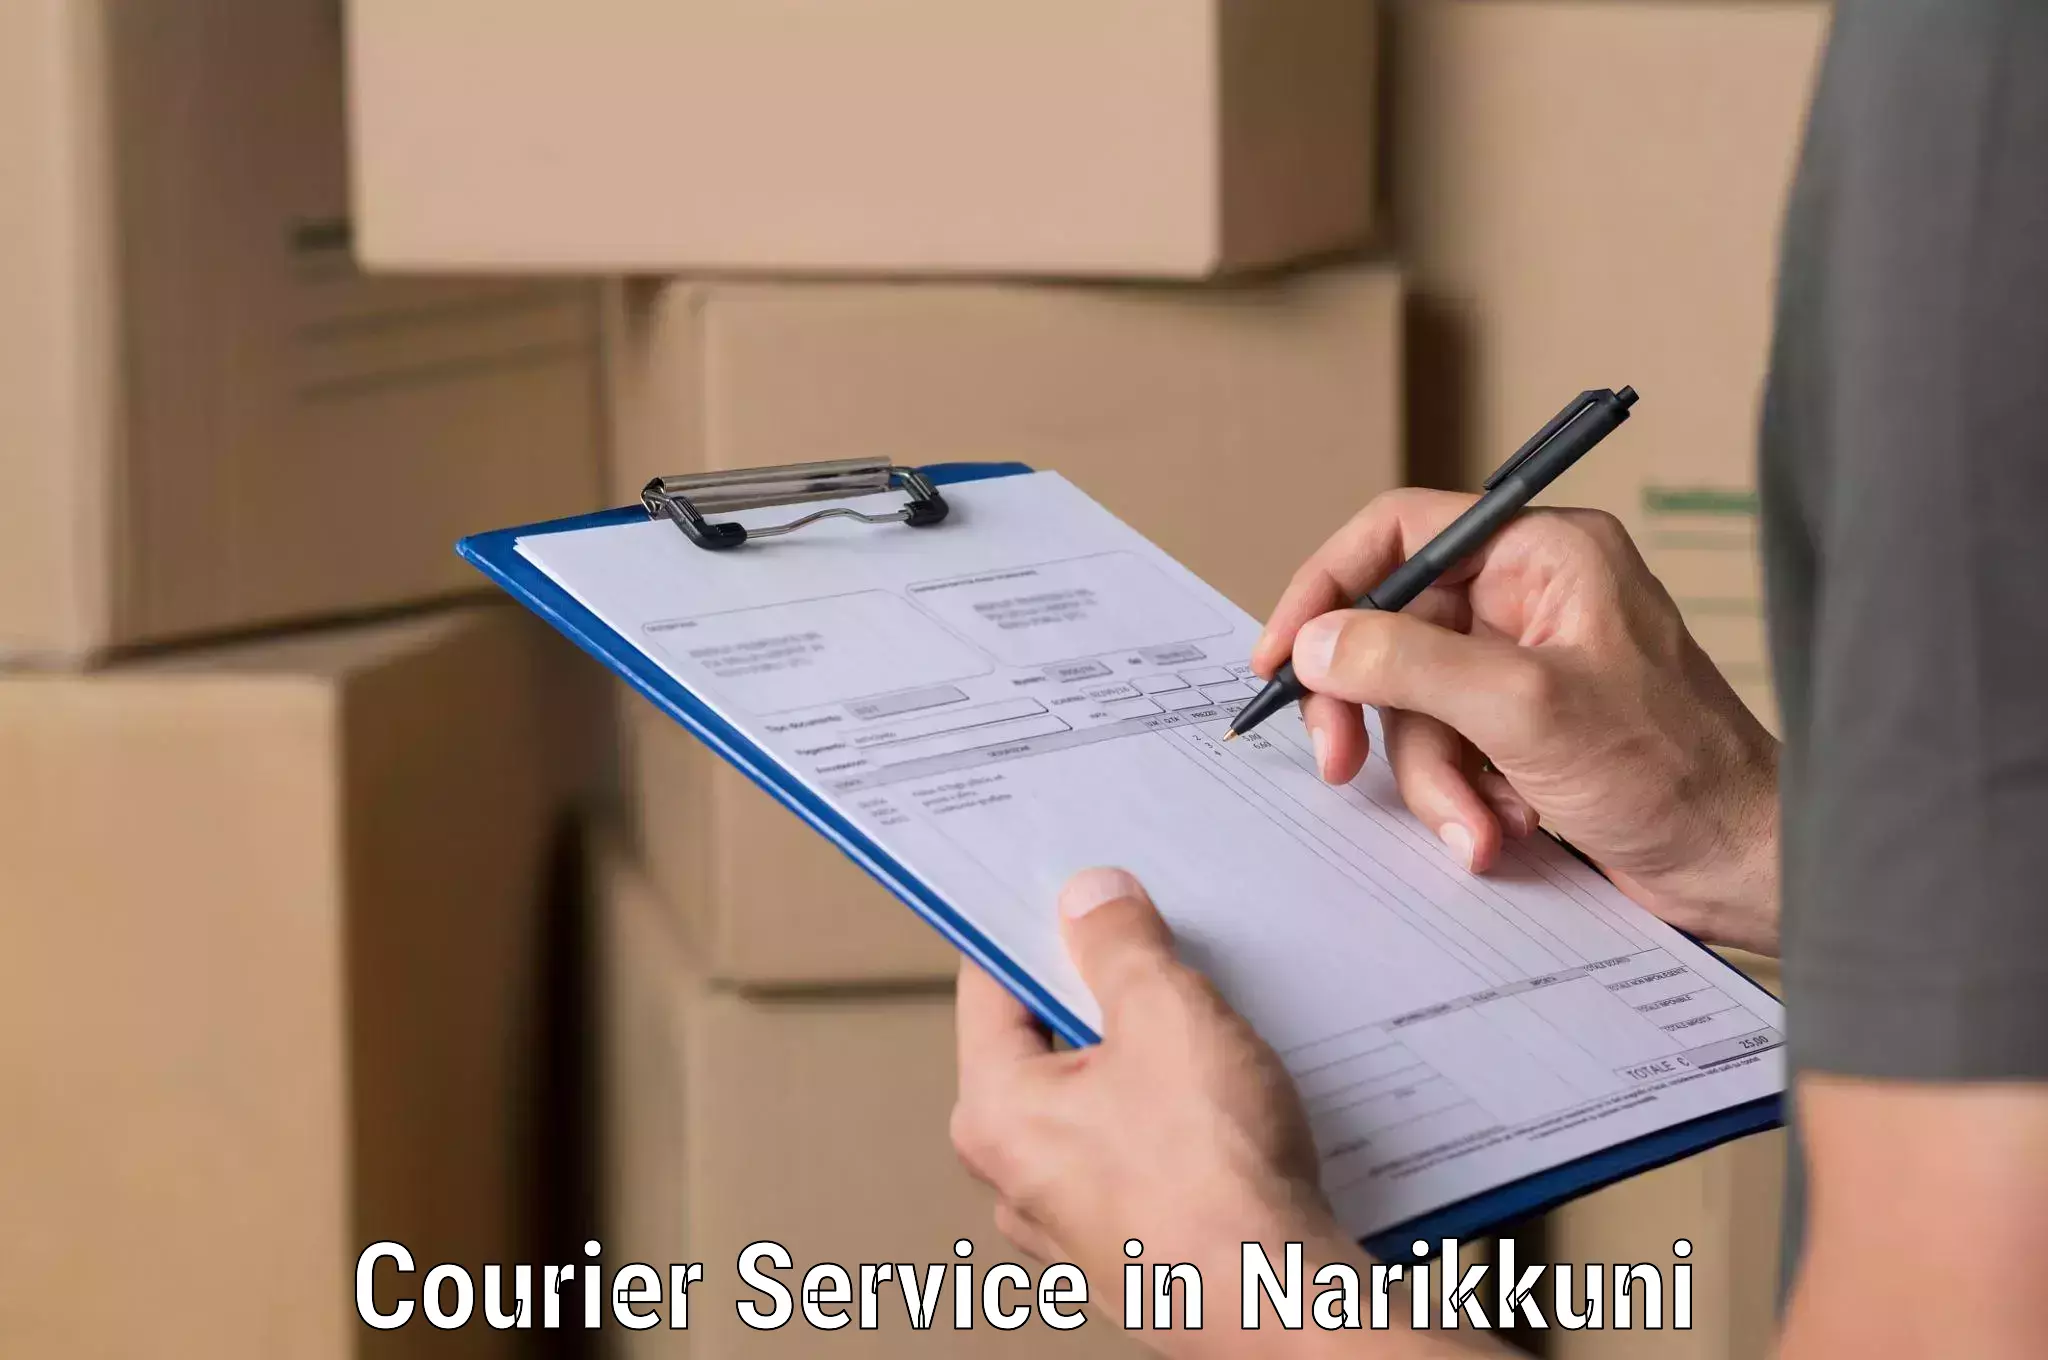 Next day courier in Narikkuni